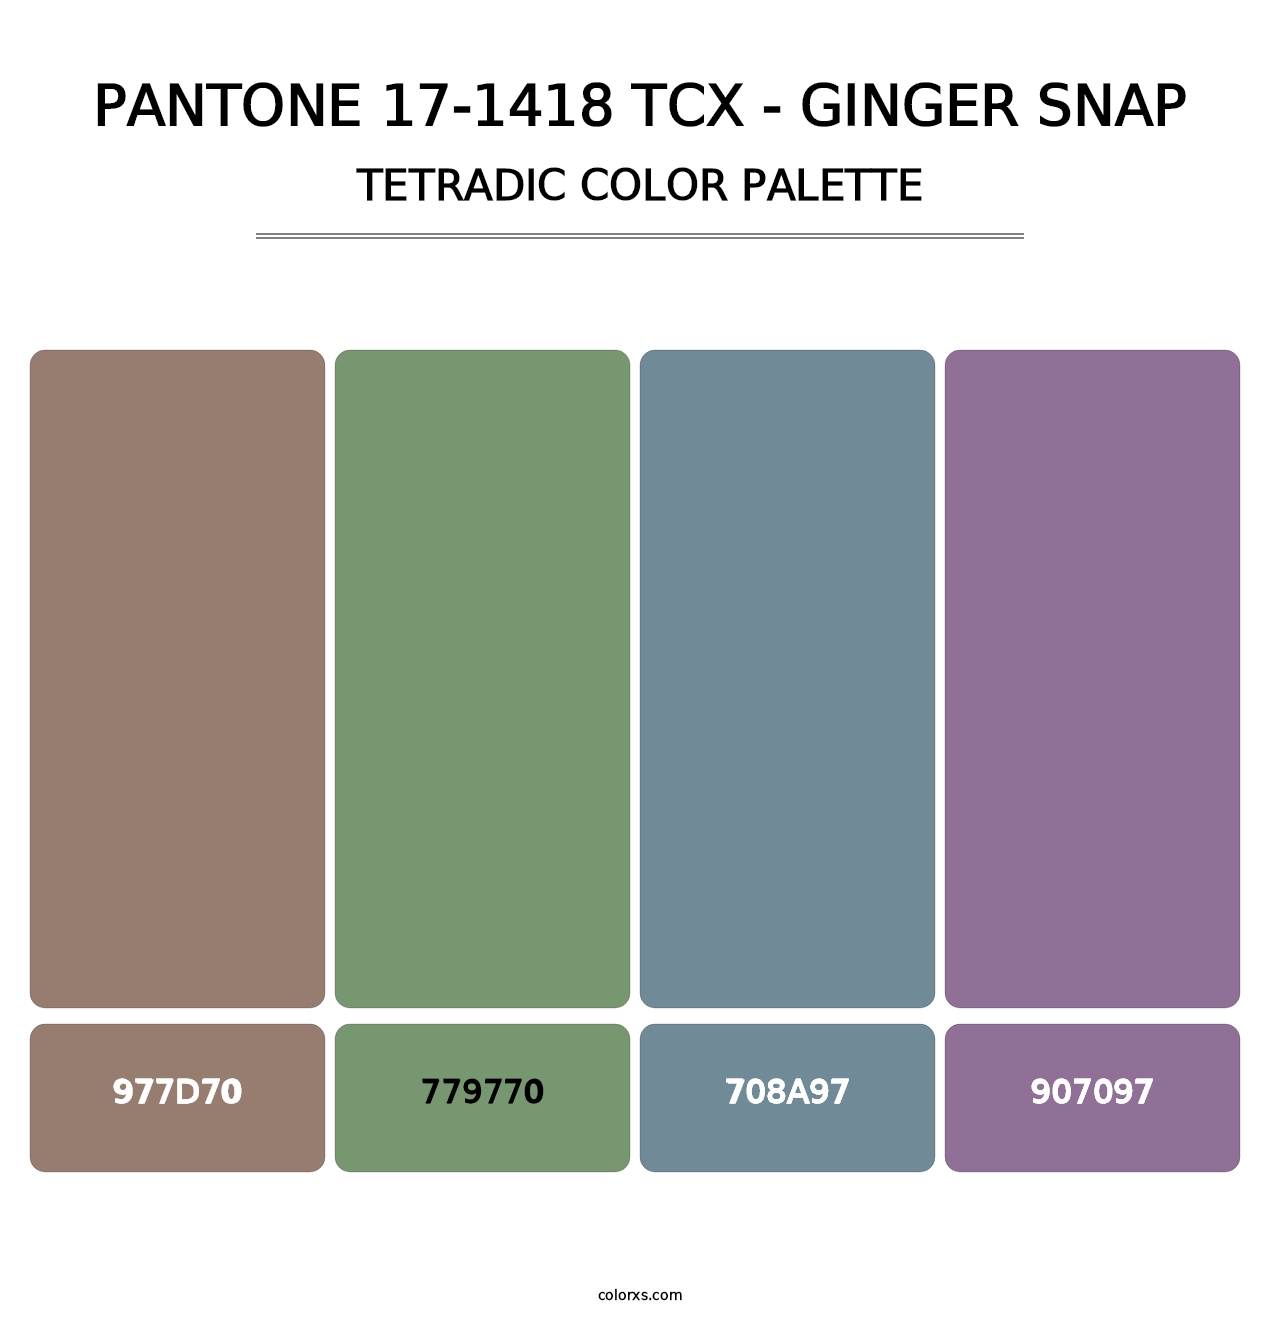 PANTONE 17-1418 TCX - Ginger Snap - Tetradic Color Palette